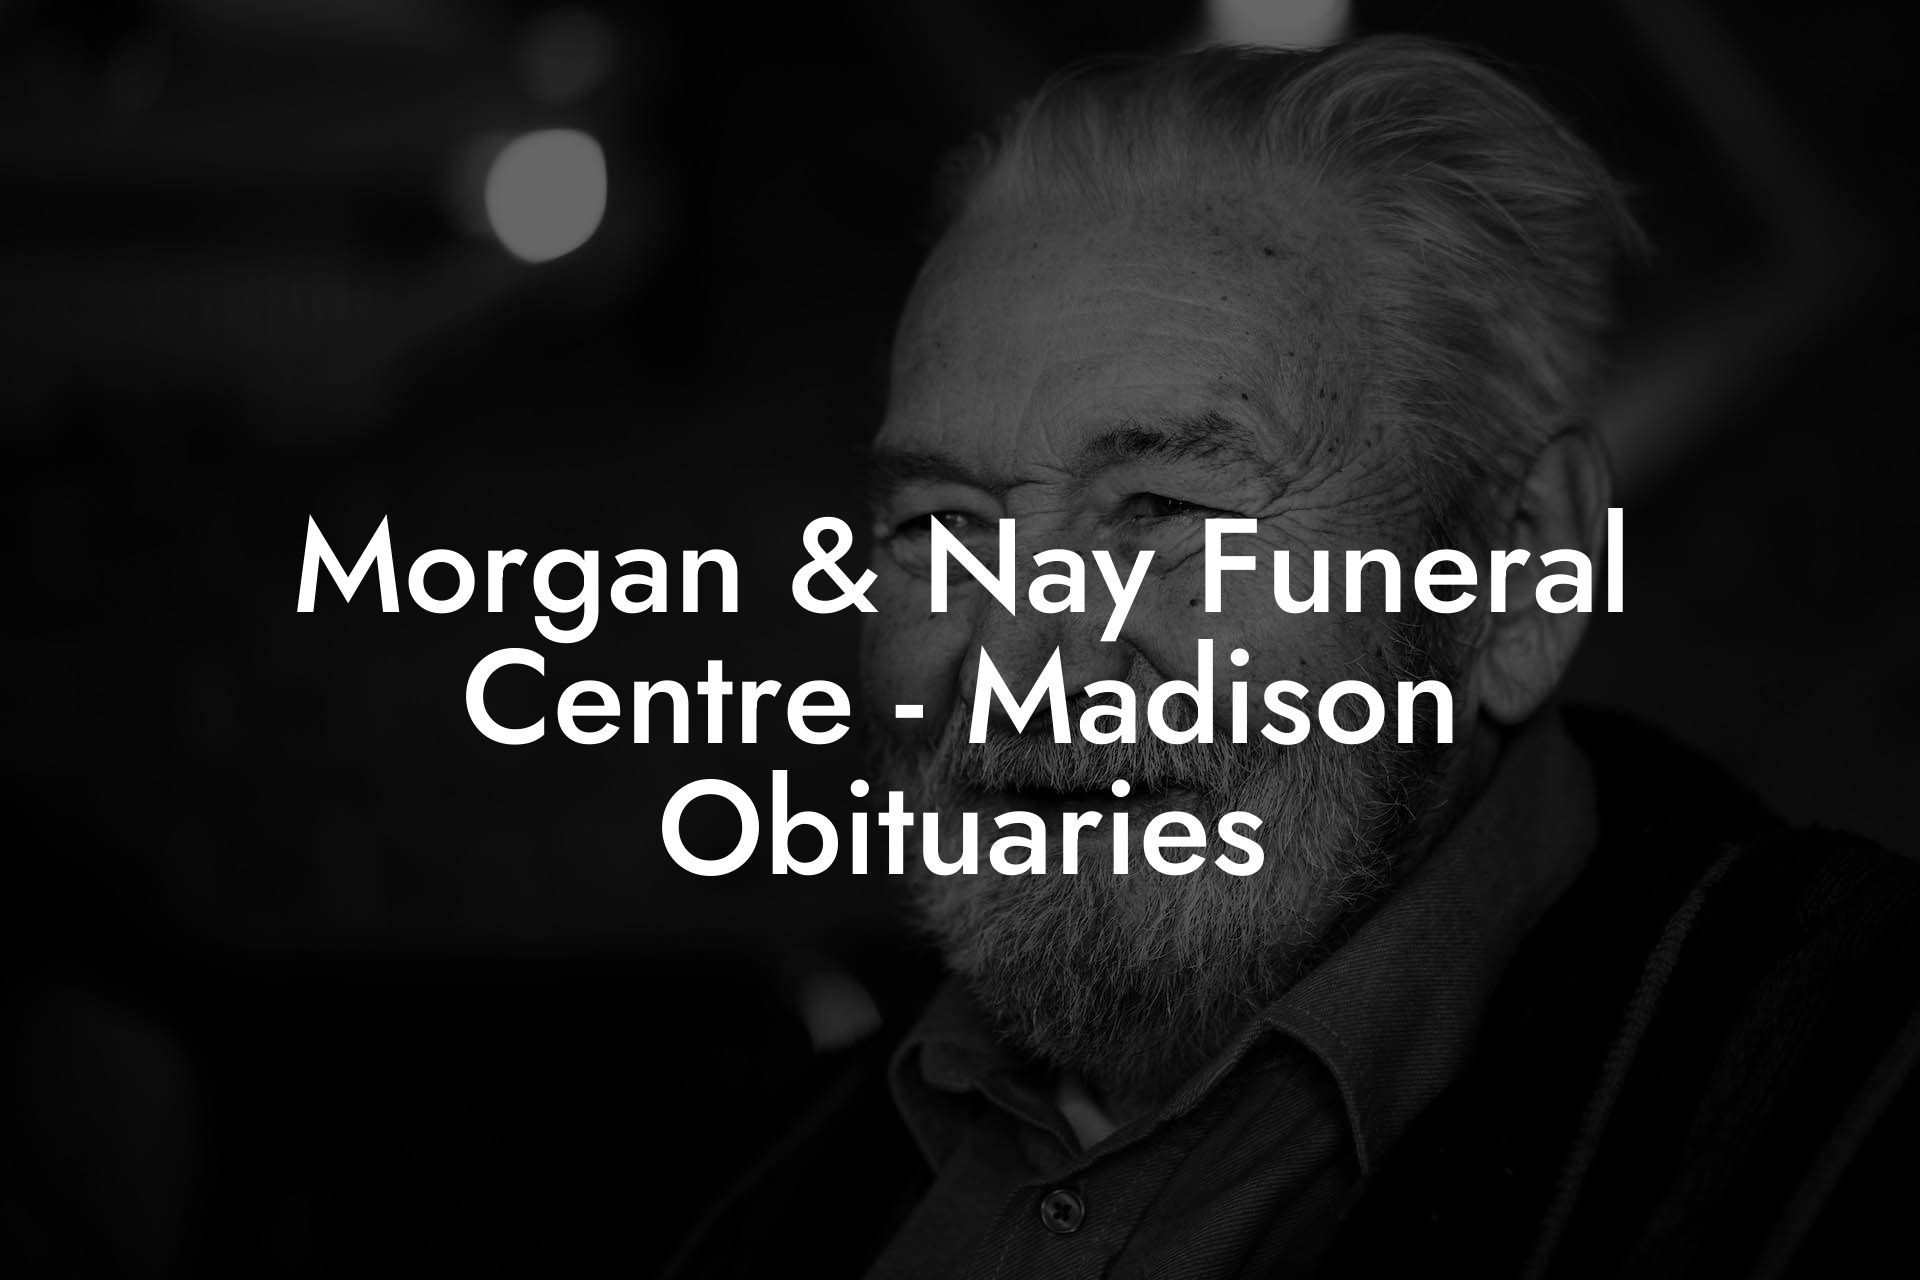 Morgan & Nay Funeral Centre - Madison Obituaries